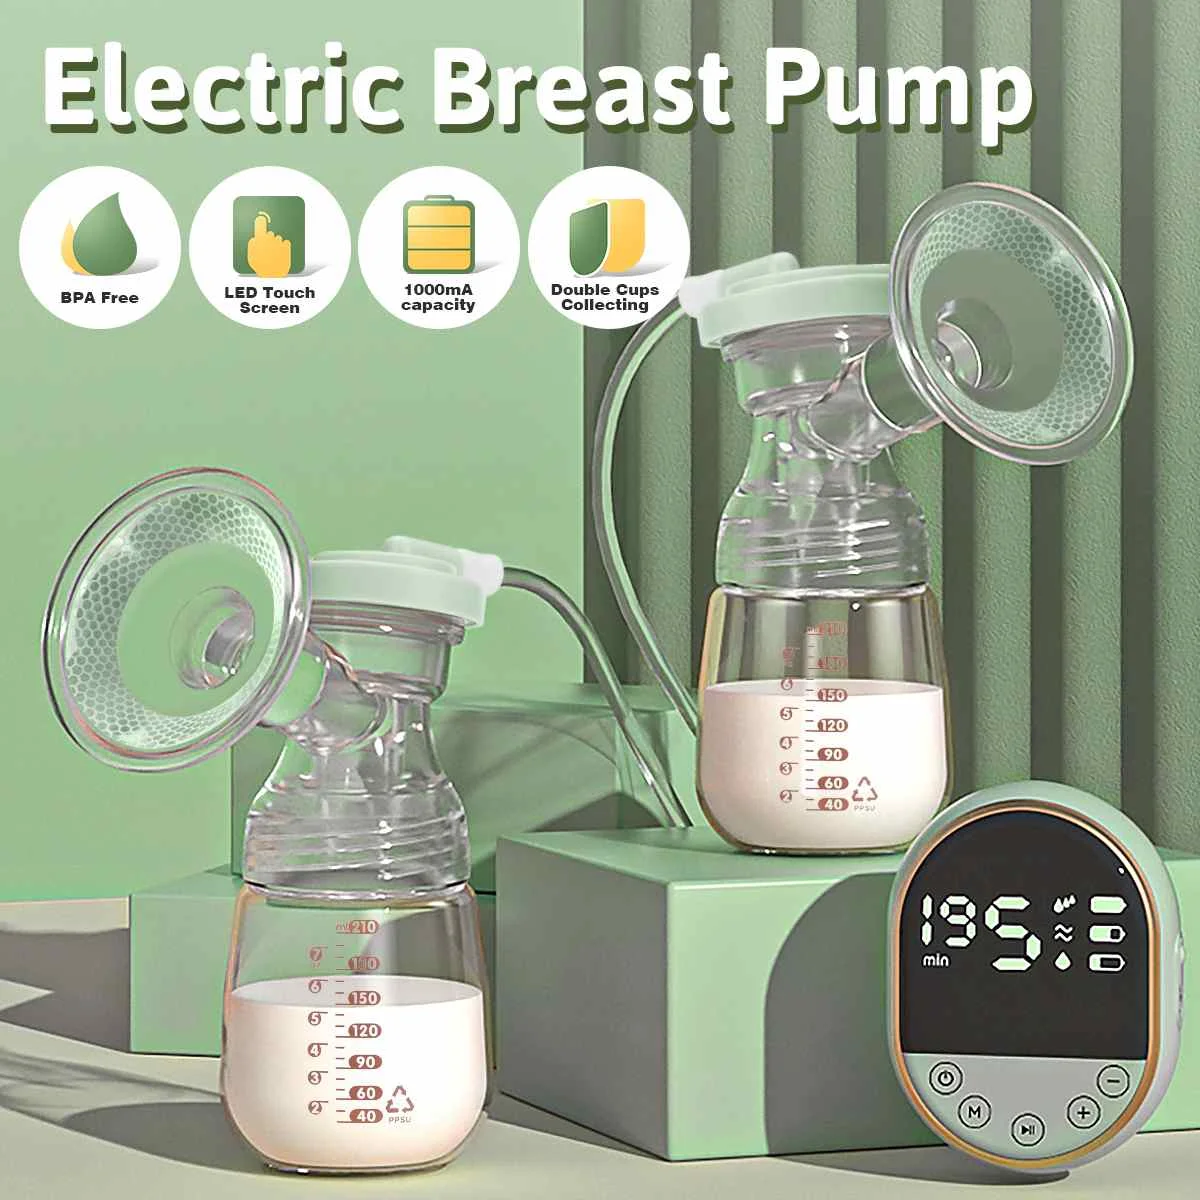 Extractor de leche para bebé, Extractor de leche eléctrico Bilateral, manos libres, 3 modos, antireflujo, accesorios para bebé, máquina de ordeño